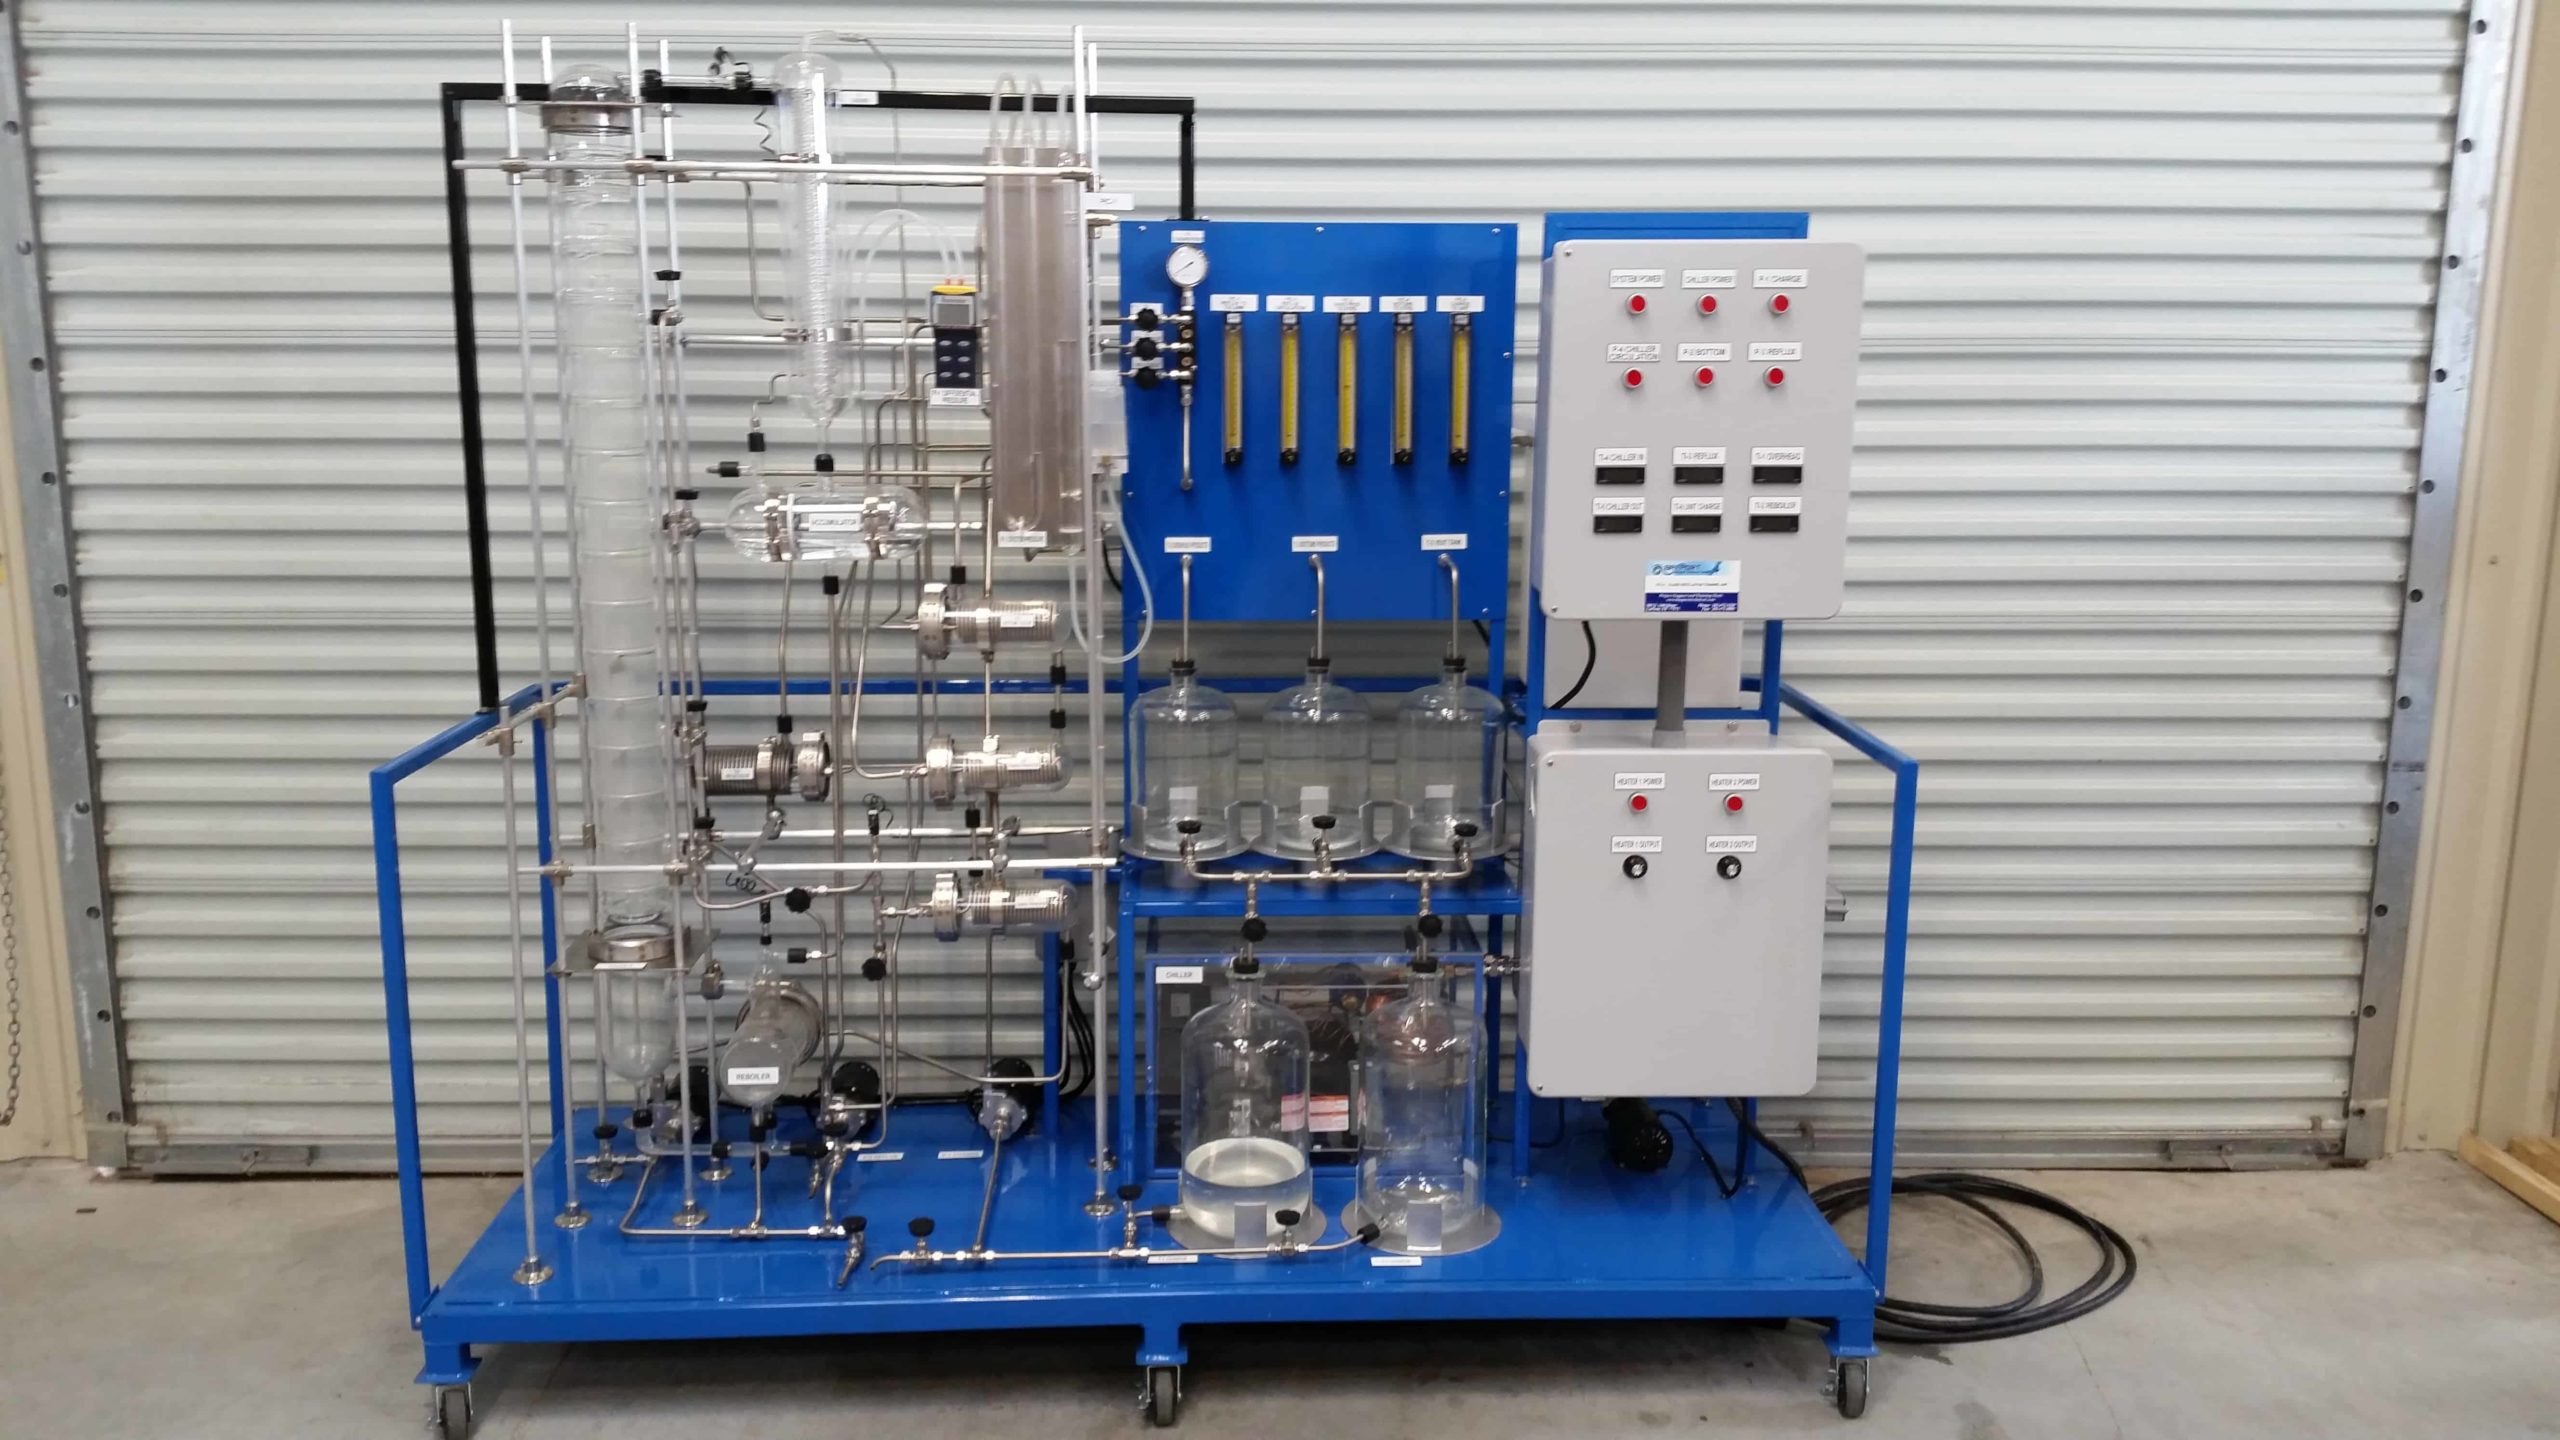 Fbun lab что это. Atmospheric distillation. Glass Water distillation Unit Price in bd | Glass Water distillation Unit. Steel Lowboy Chiller 130x70x63. Du-02 distillation Unit manual.